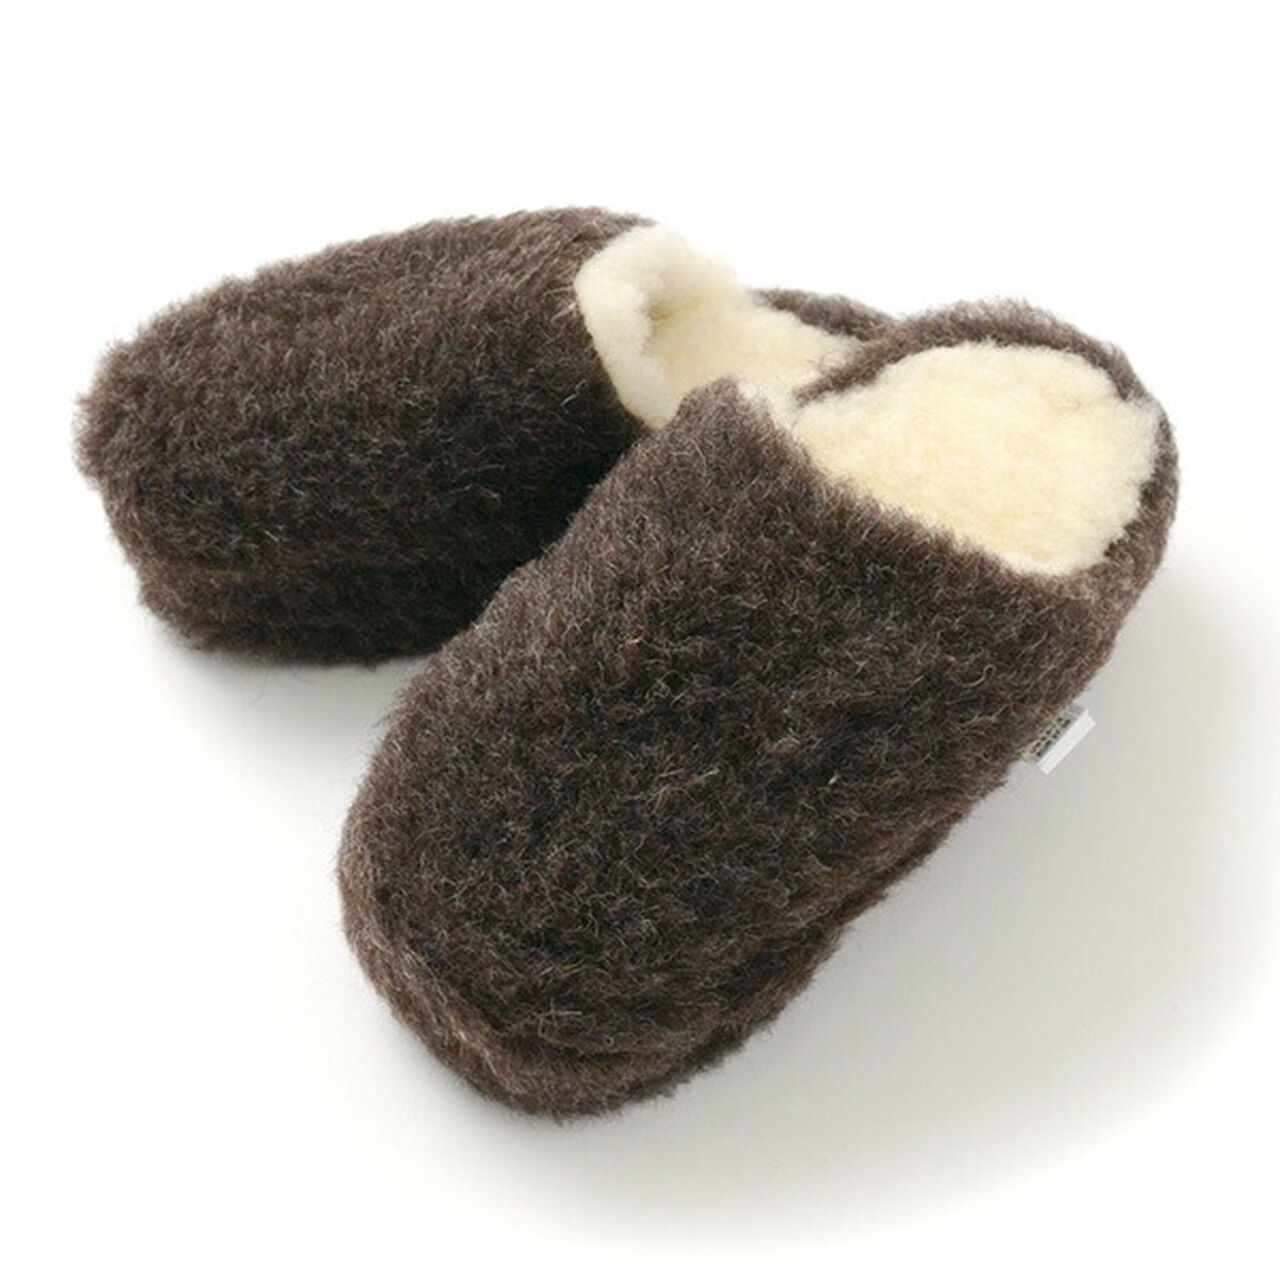 Boa Wool Basic Slippers,DarkBrown, large image number 0